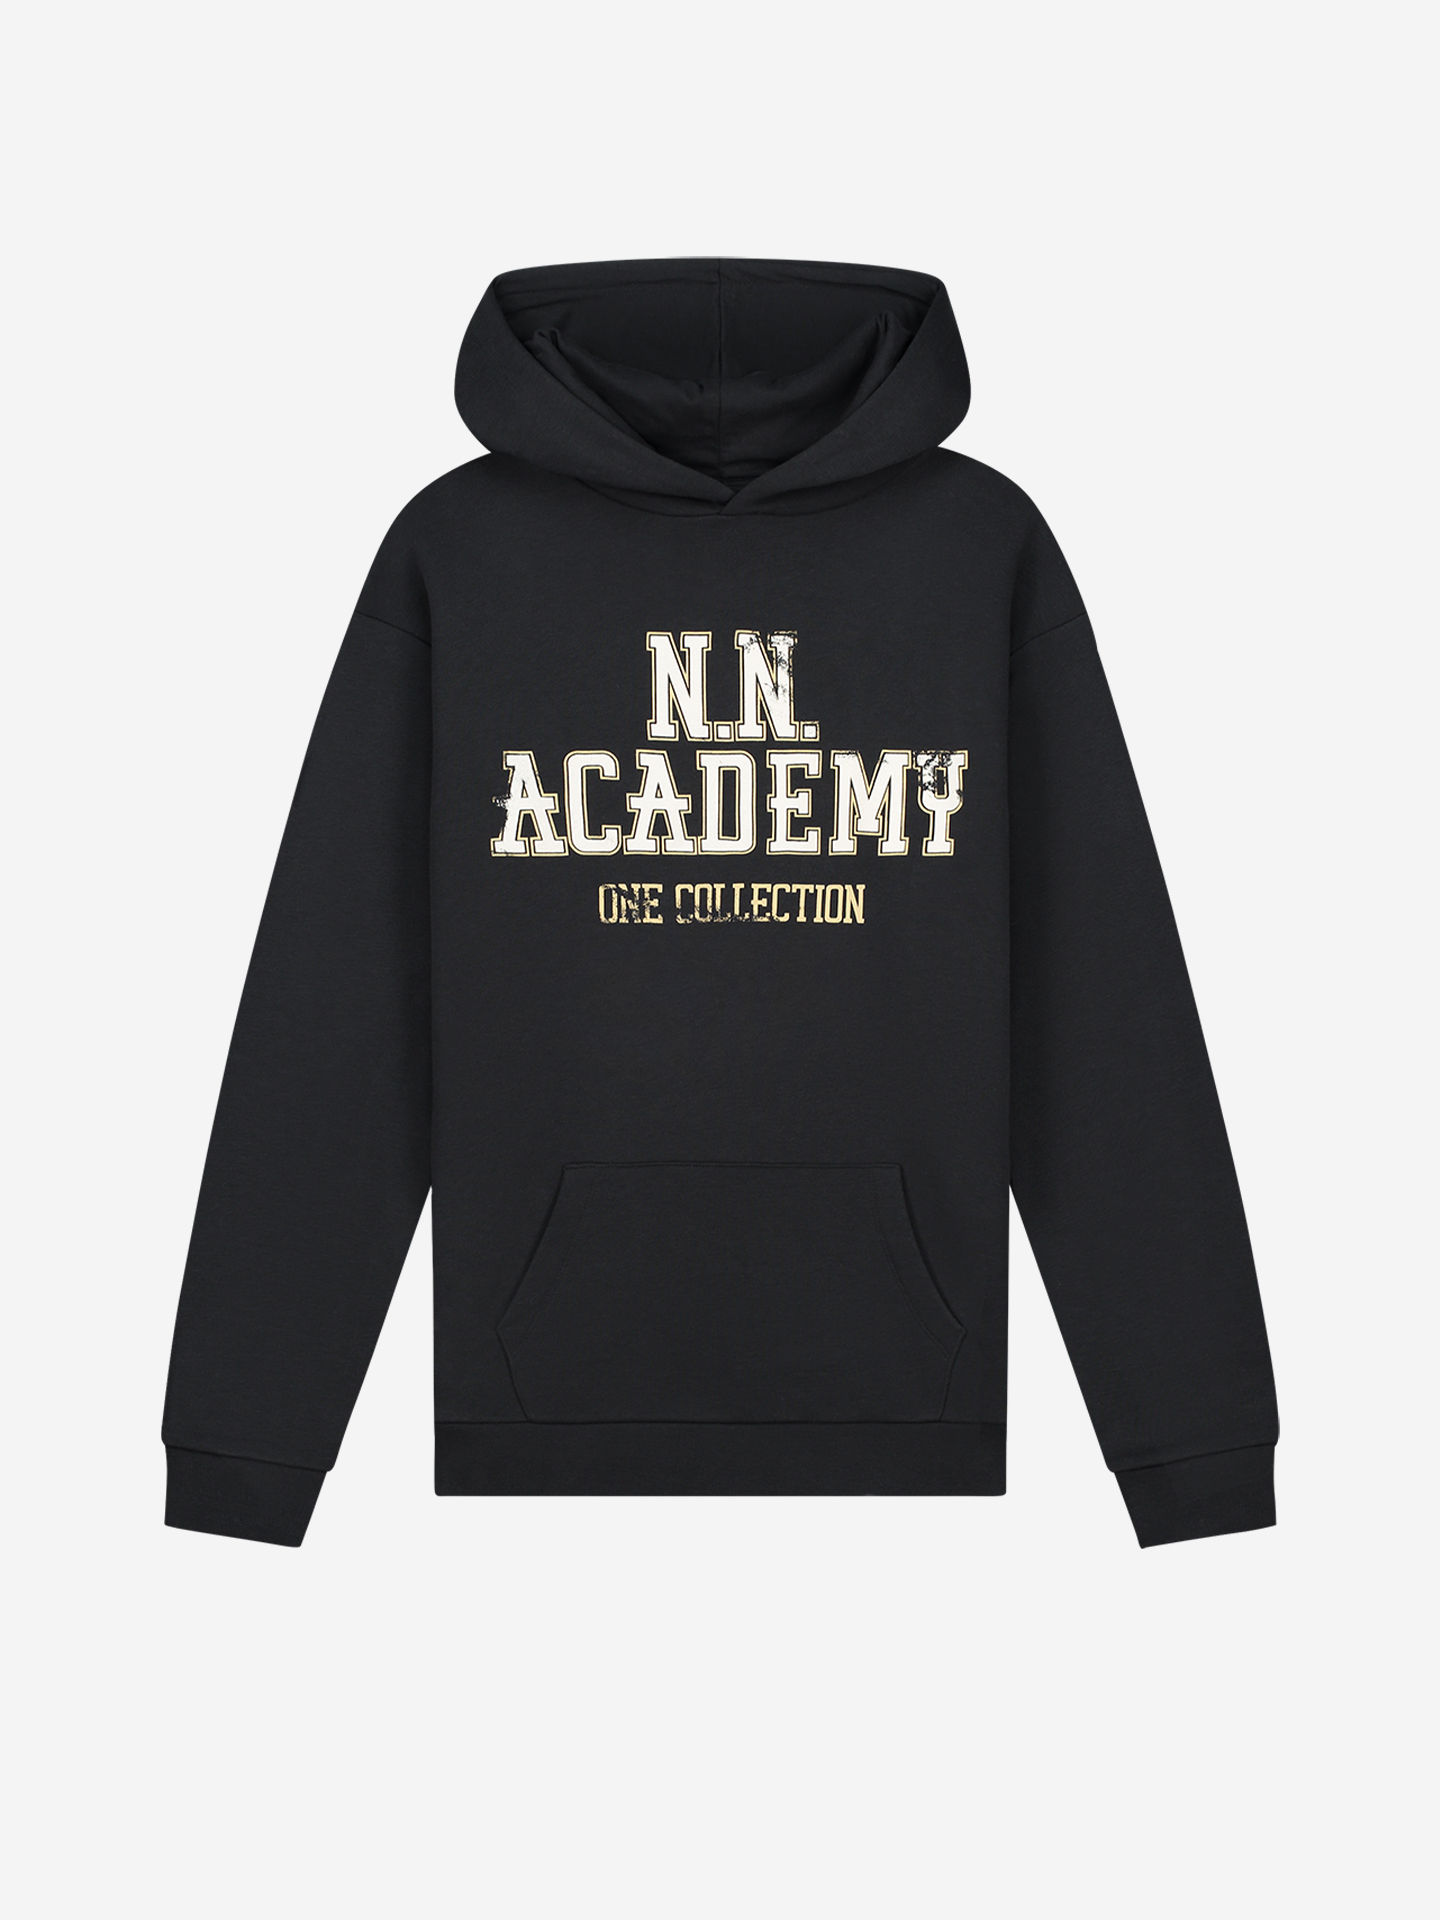 NN Academy Hoodie